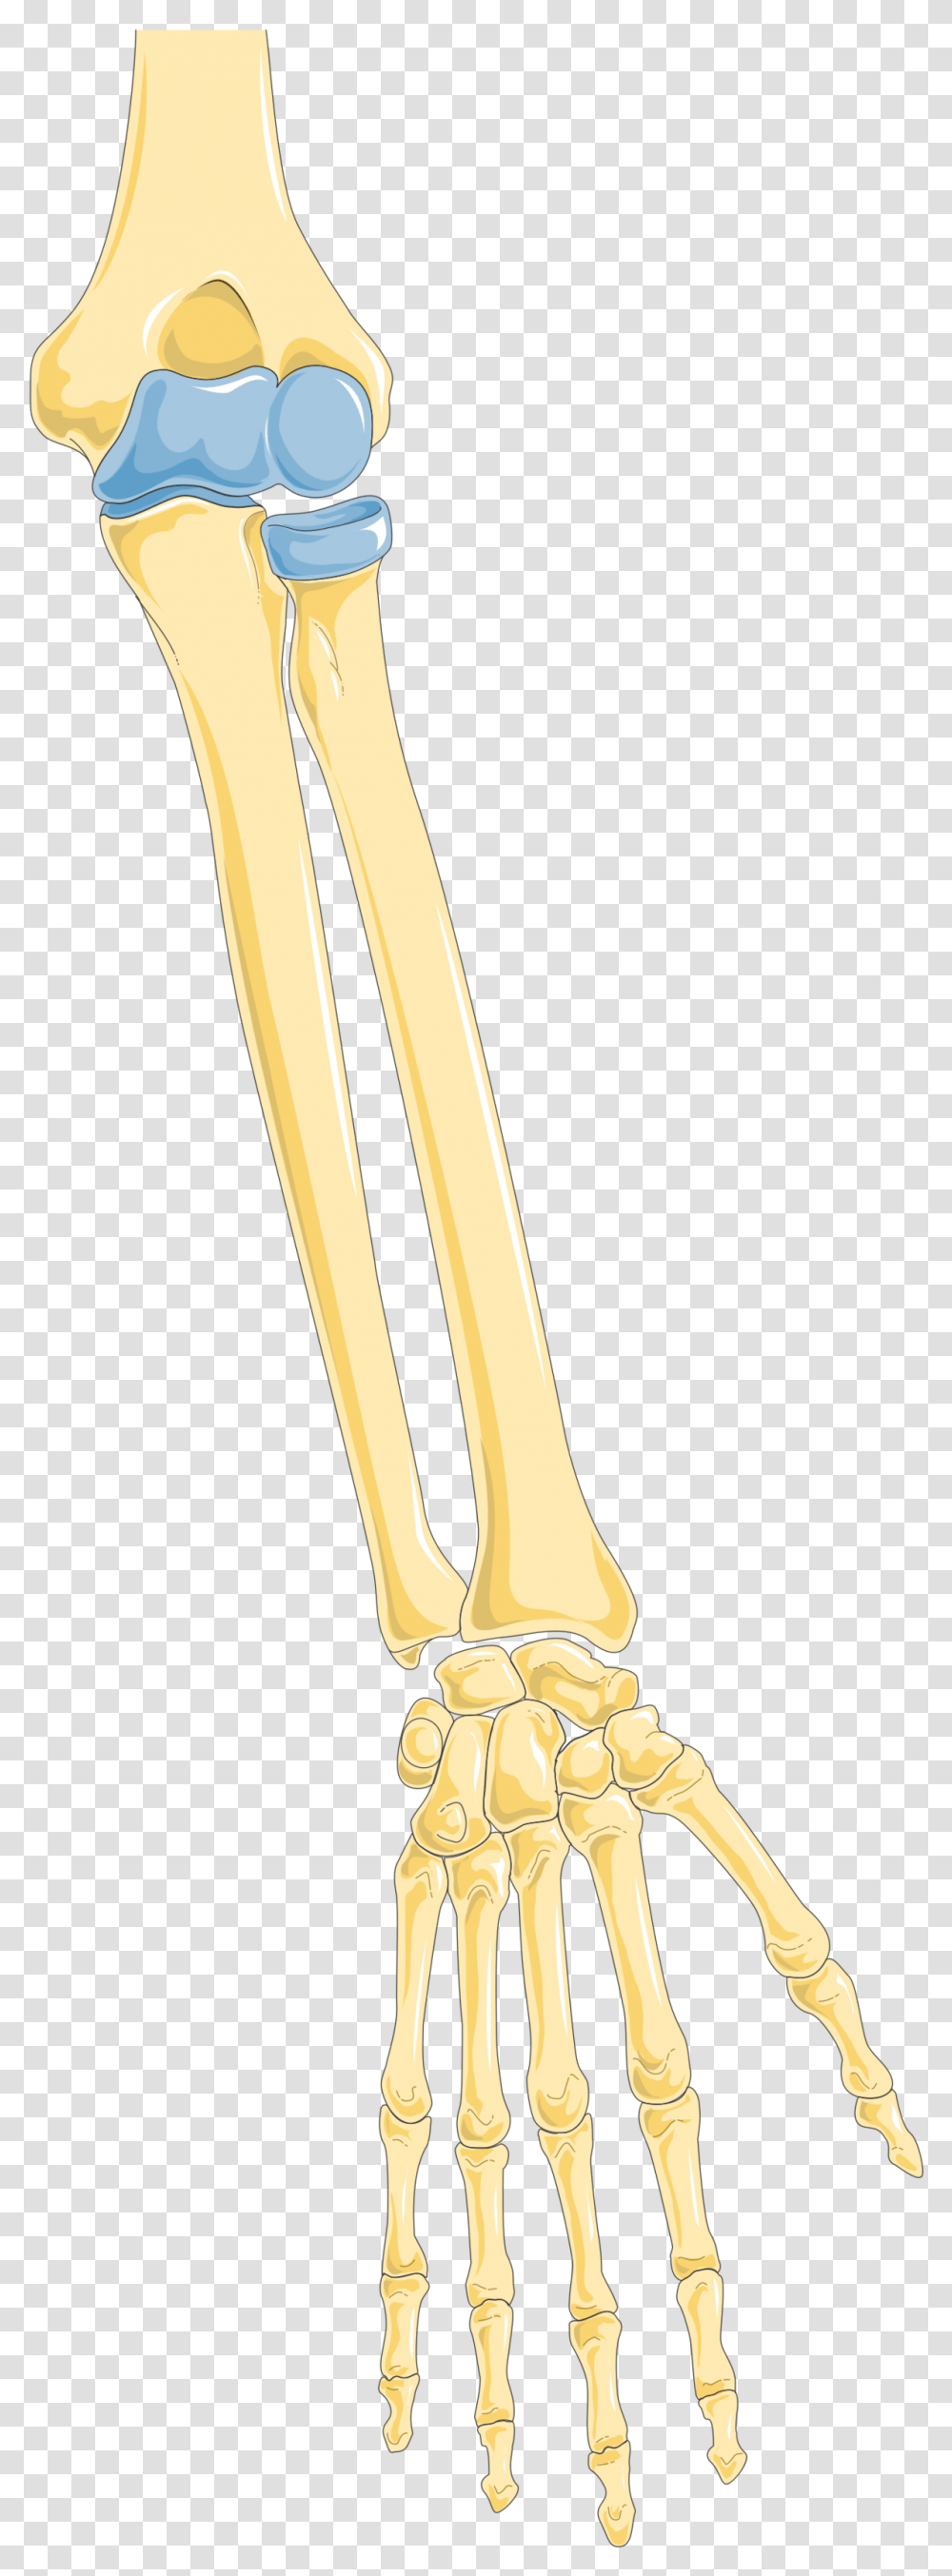 Arm 1 Bone, Cutlery, Tool, Fork, Sword Transparent Png